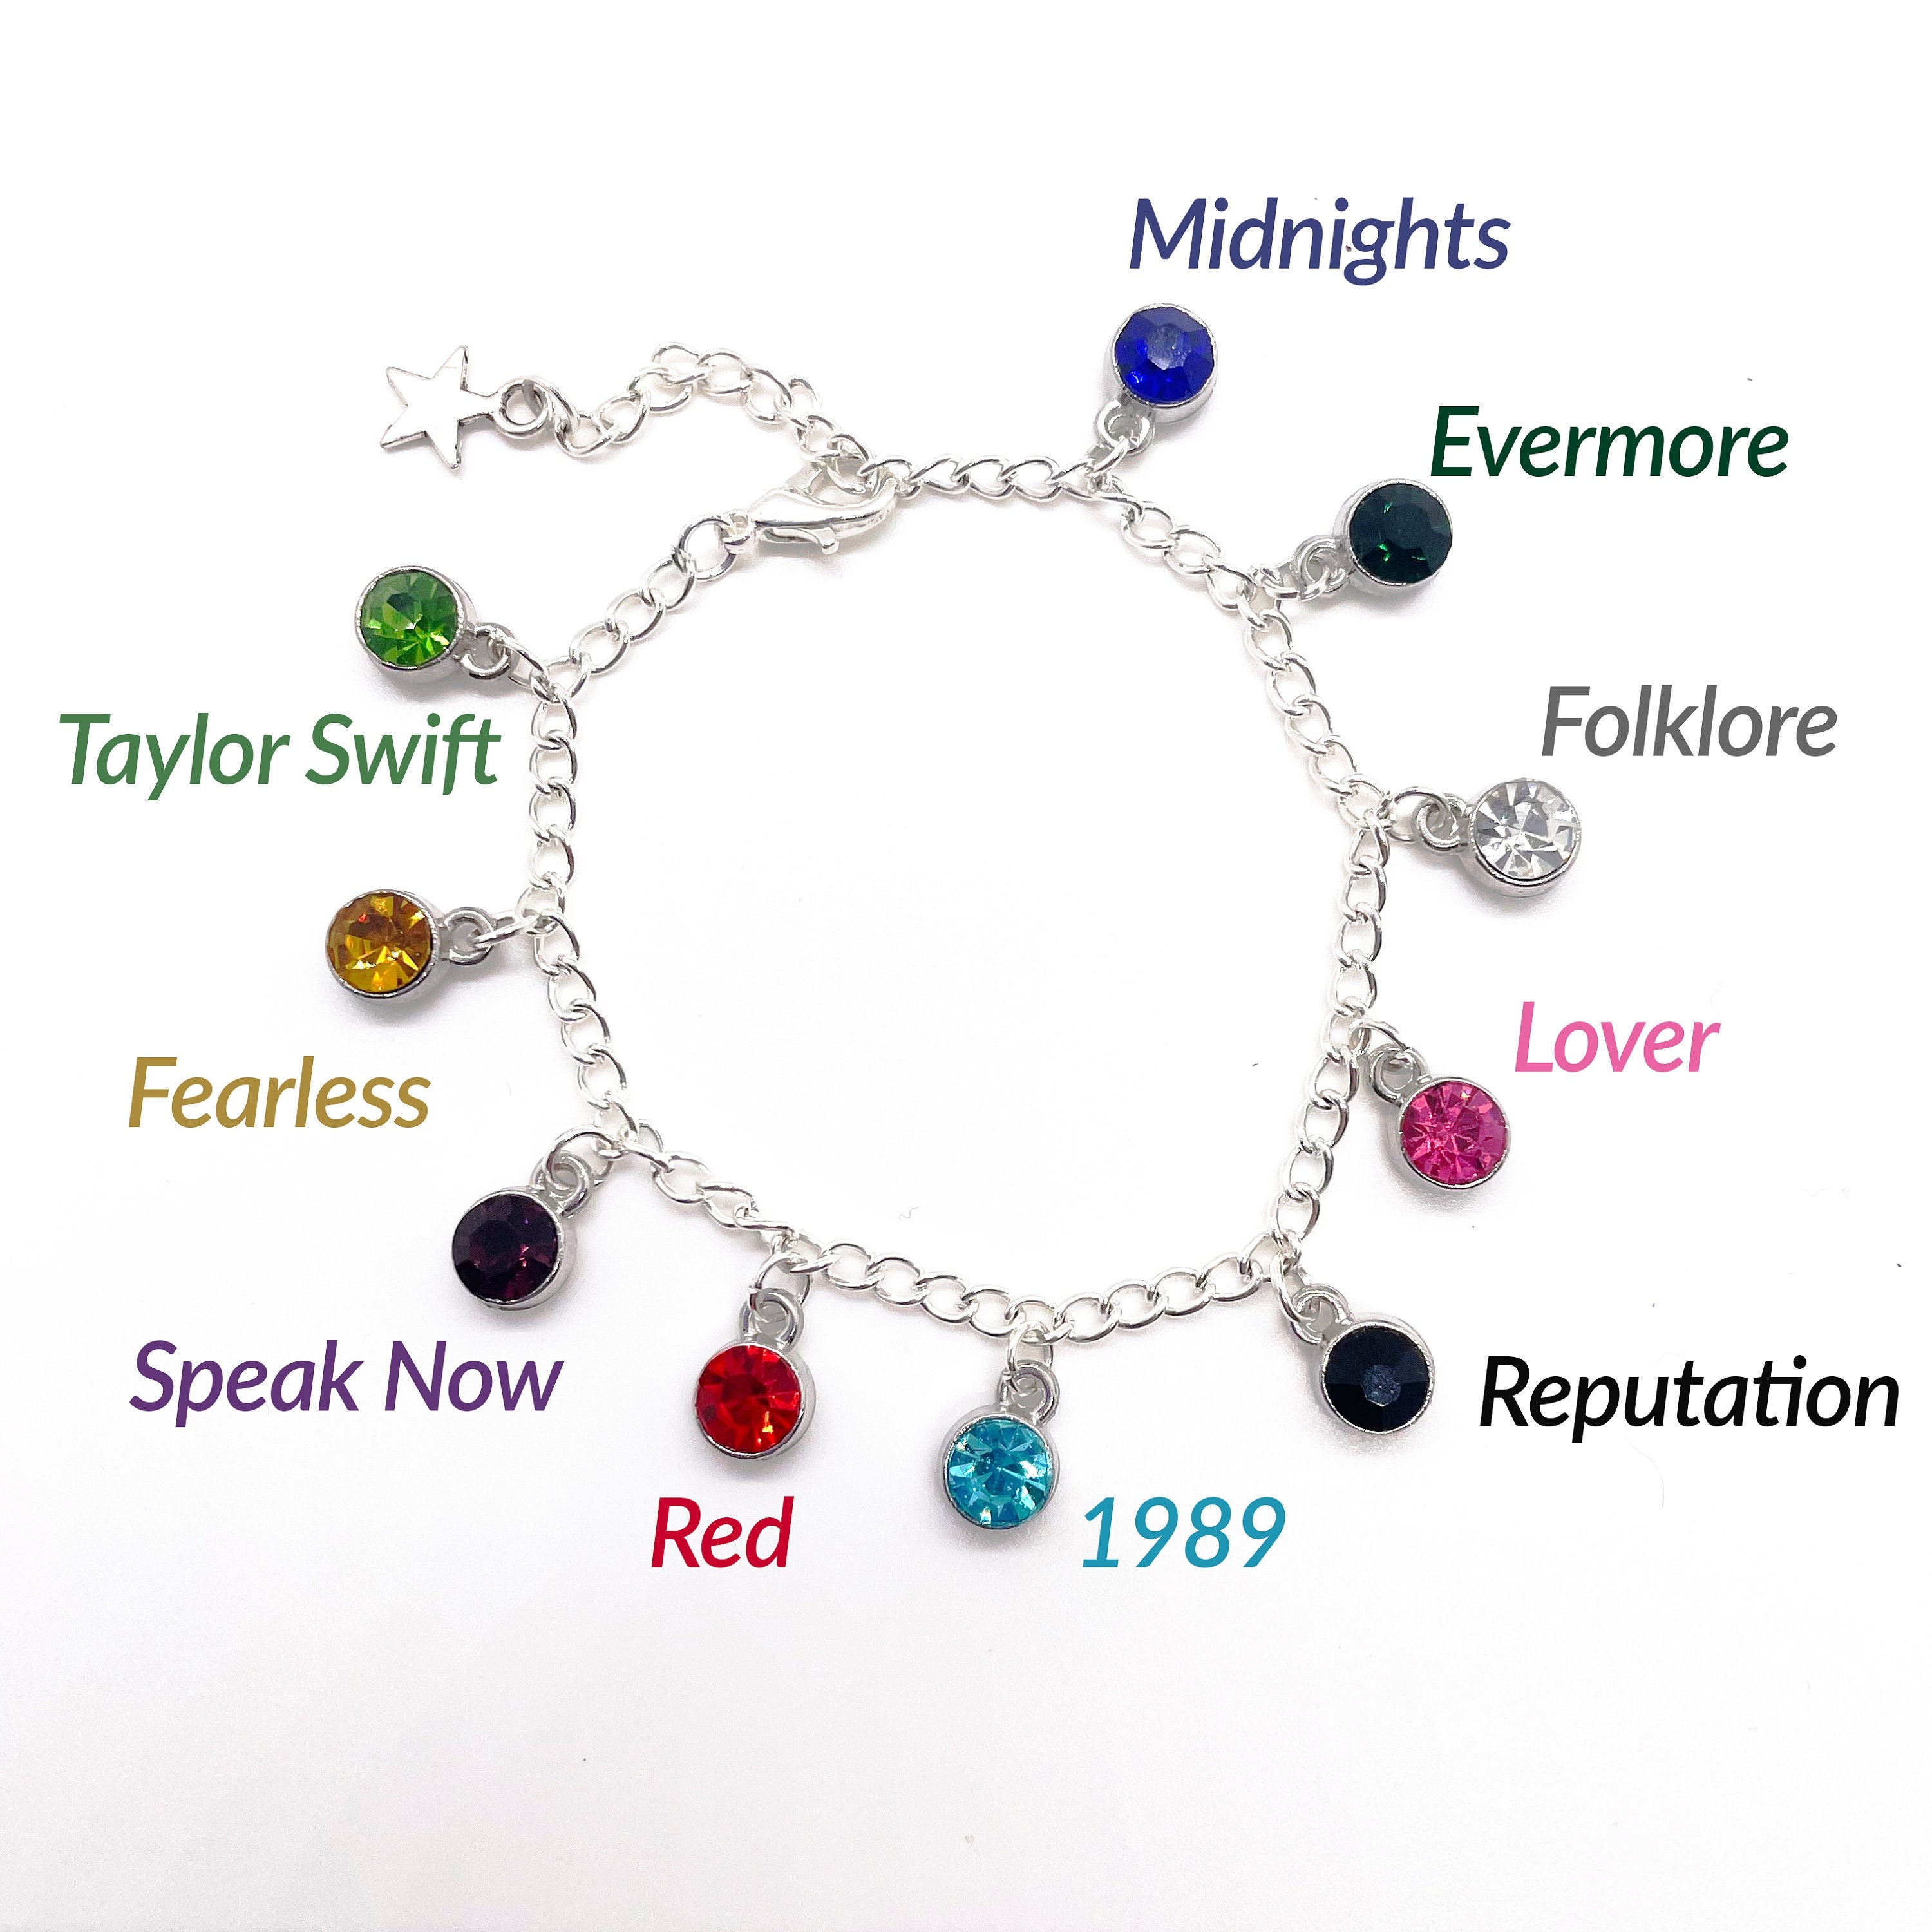 Taylor Swift Eras Charm Bracelet - New